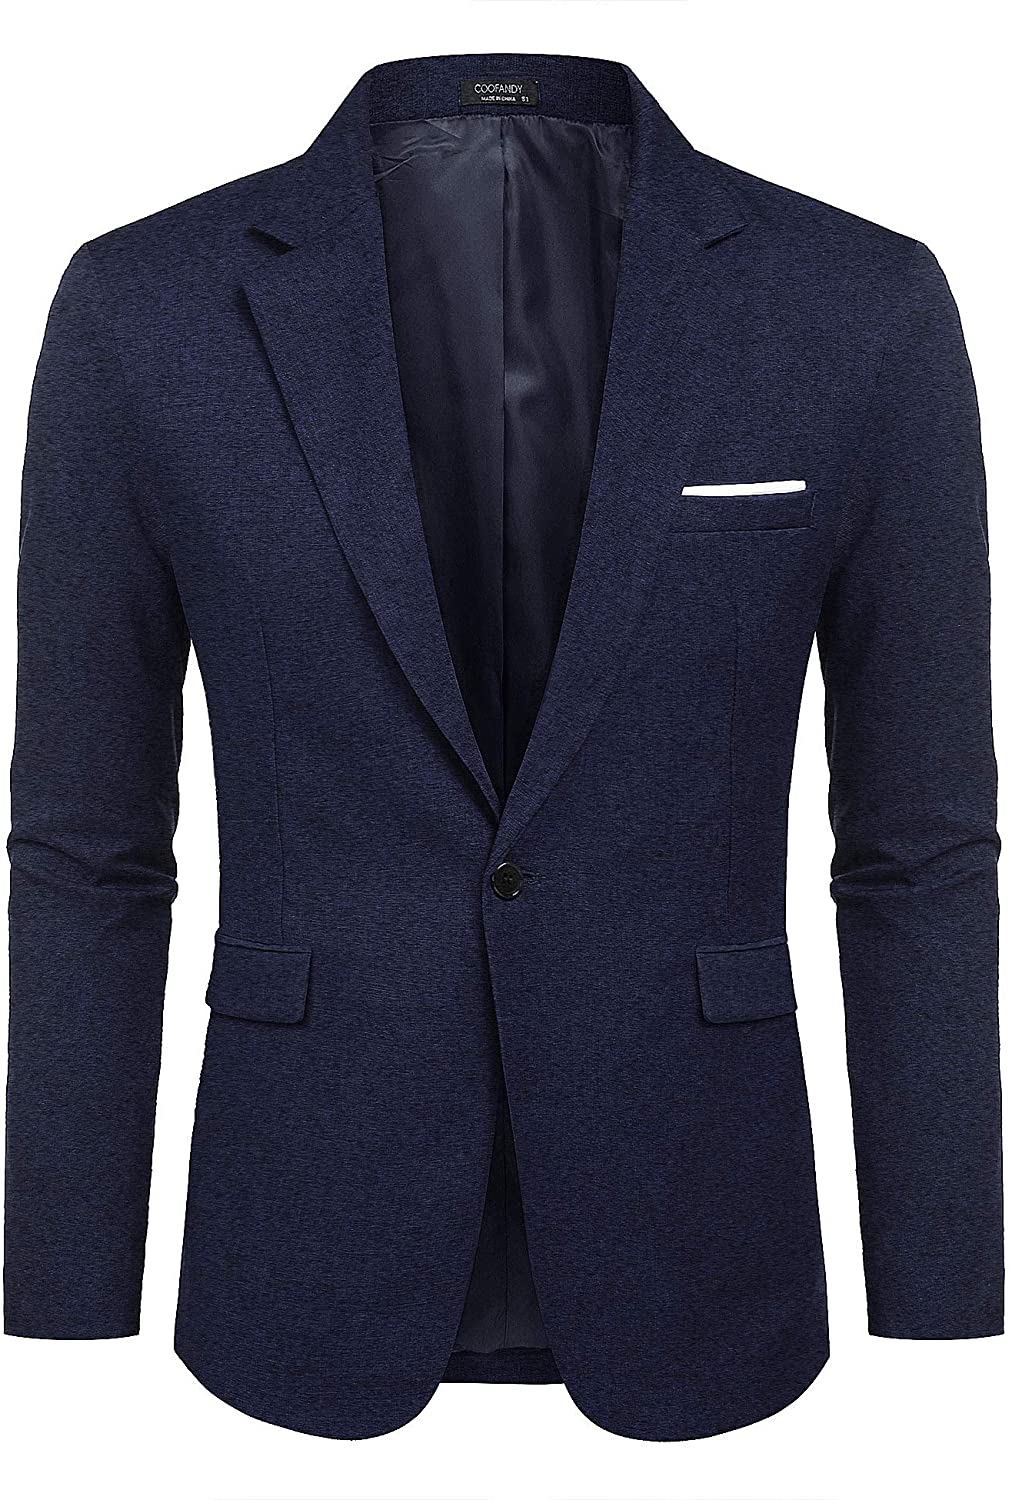 COOFANDY Mens Cotton Casual Lapel Blazer Jacket Lightweight, Blue, Size ...